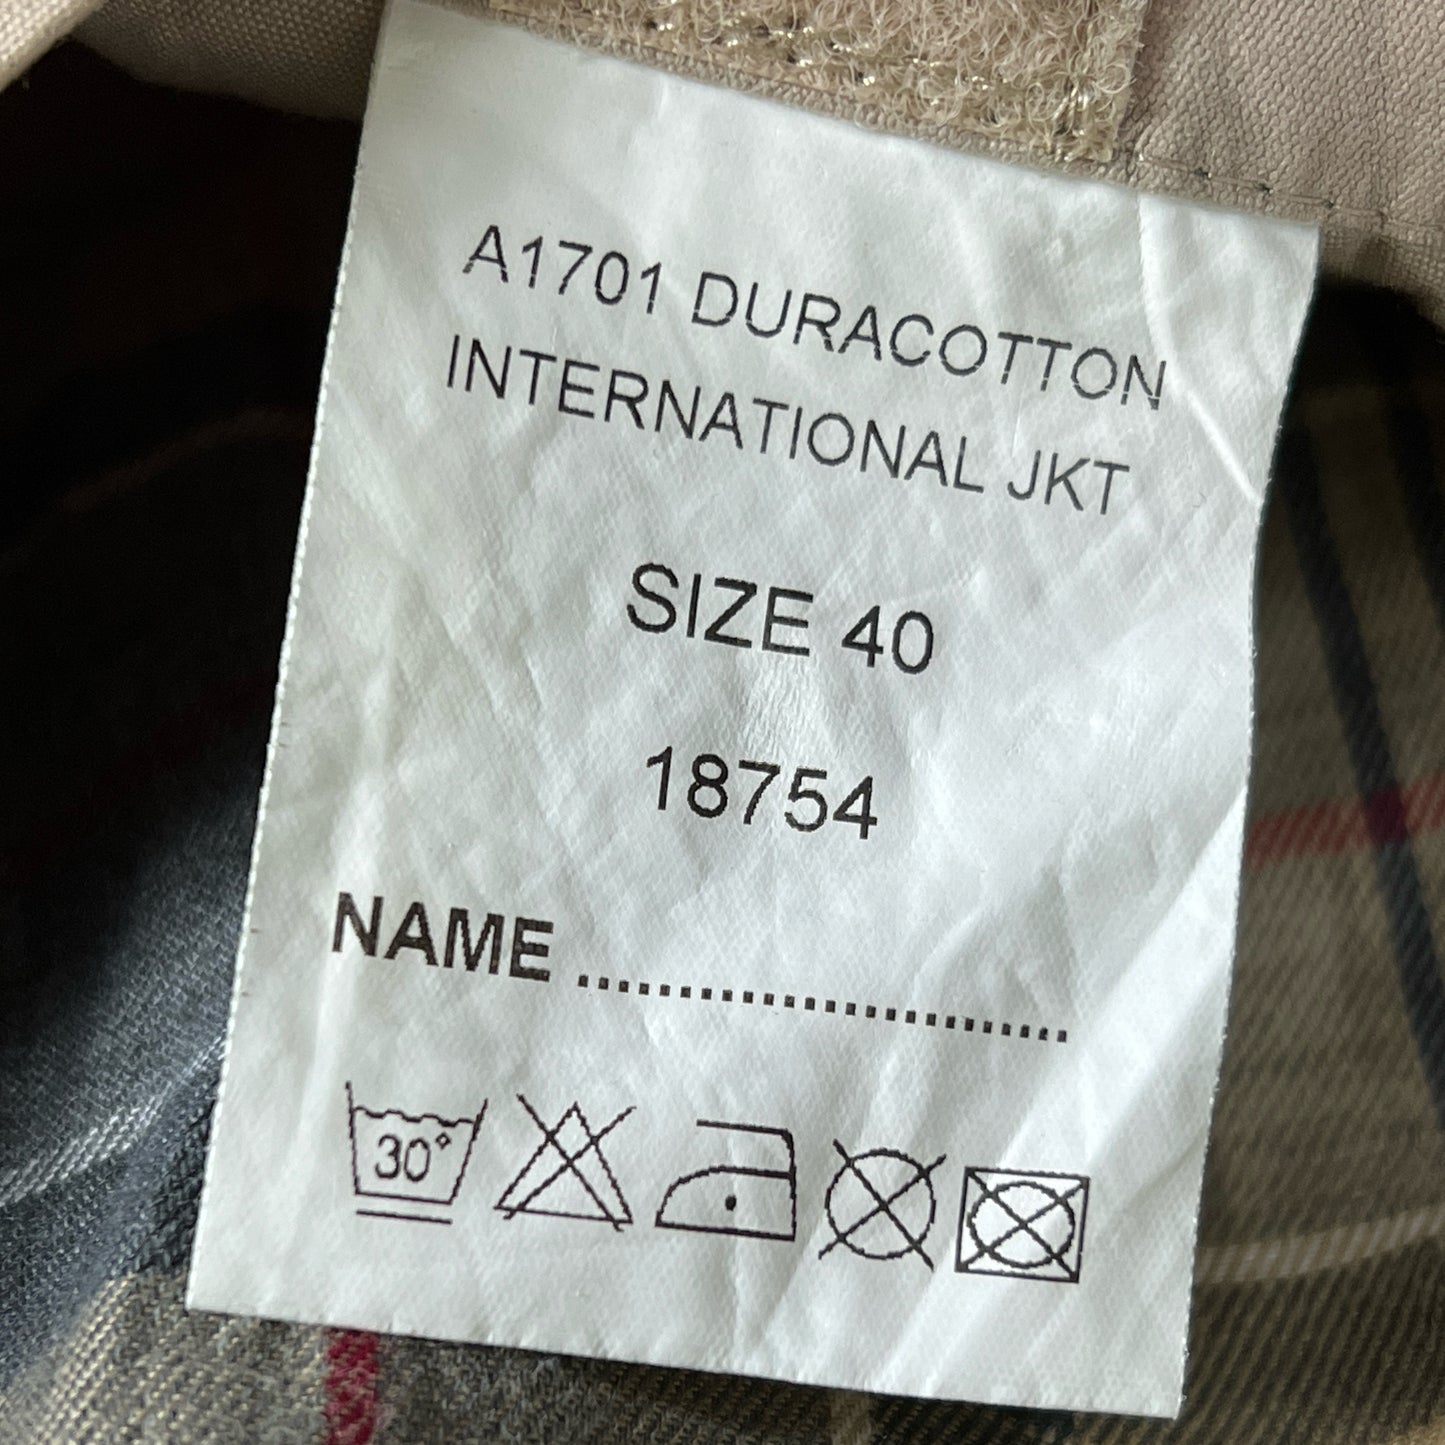 Giacca Barbour International Beige C40/102 cm - Barbour Beige Cotton Jacket Medium